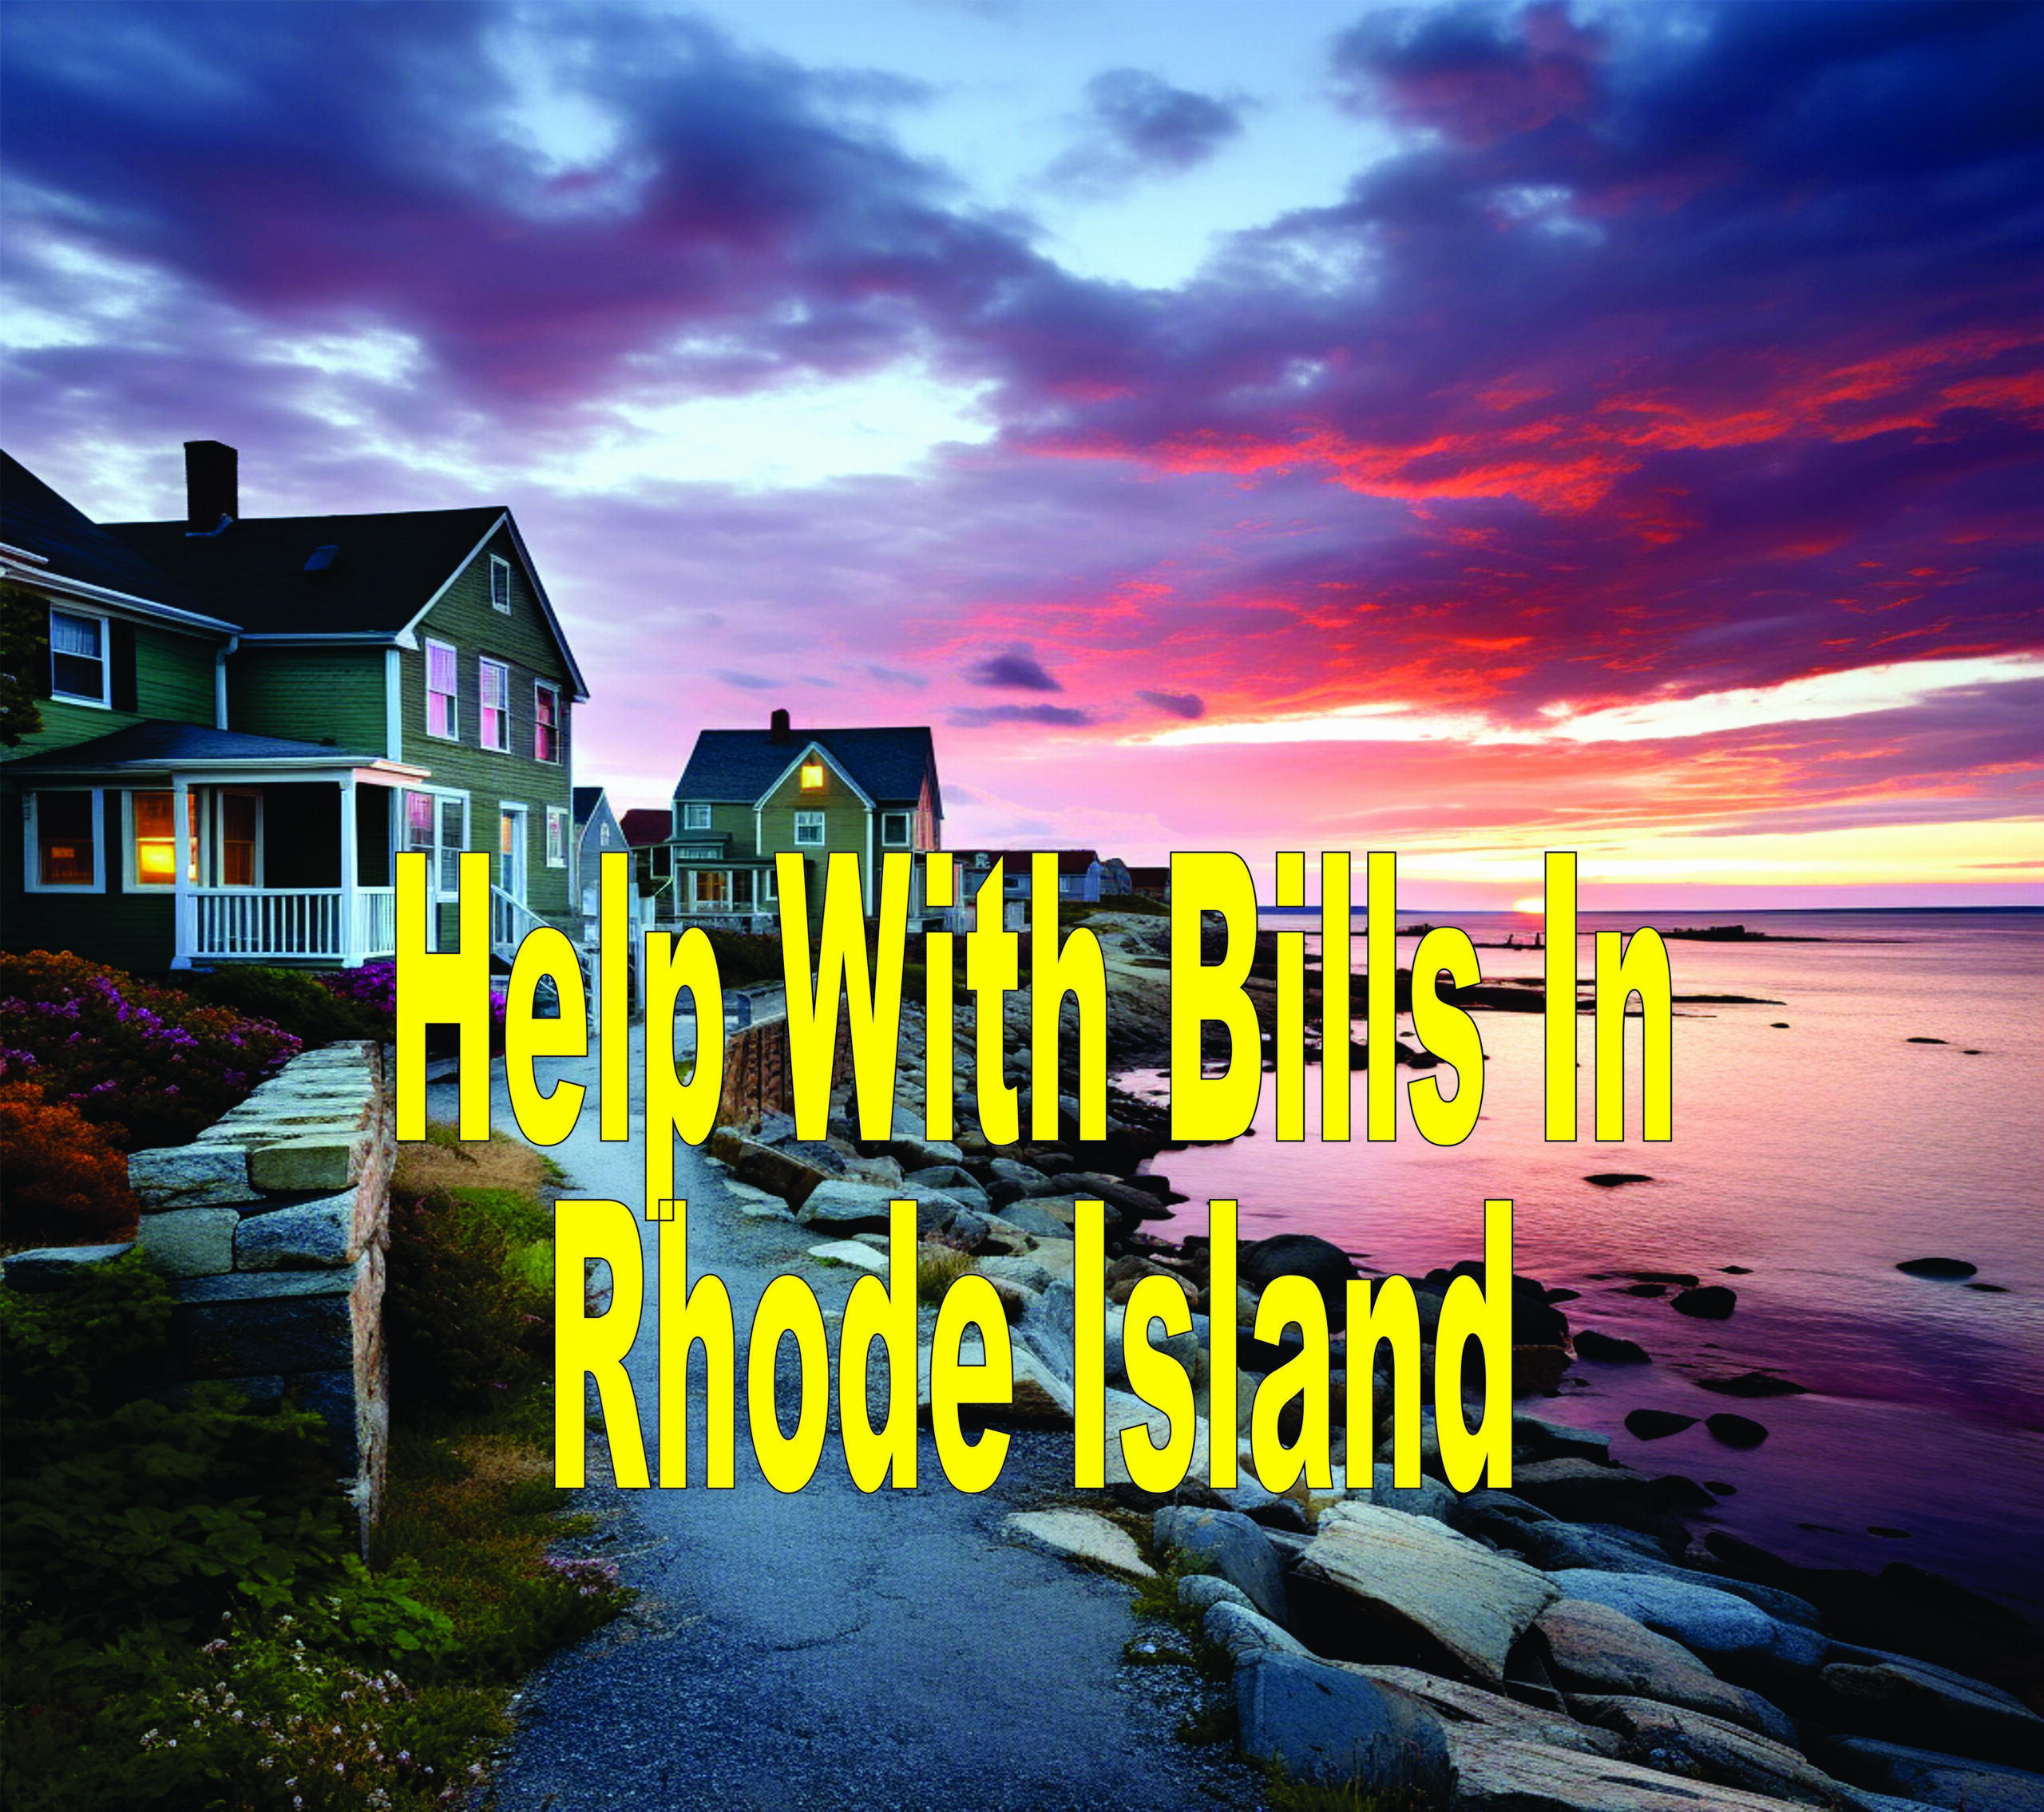 Help With Bills In Rhode Island